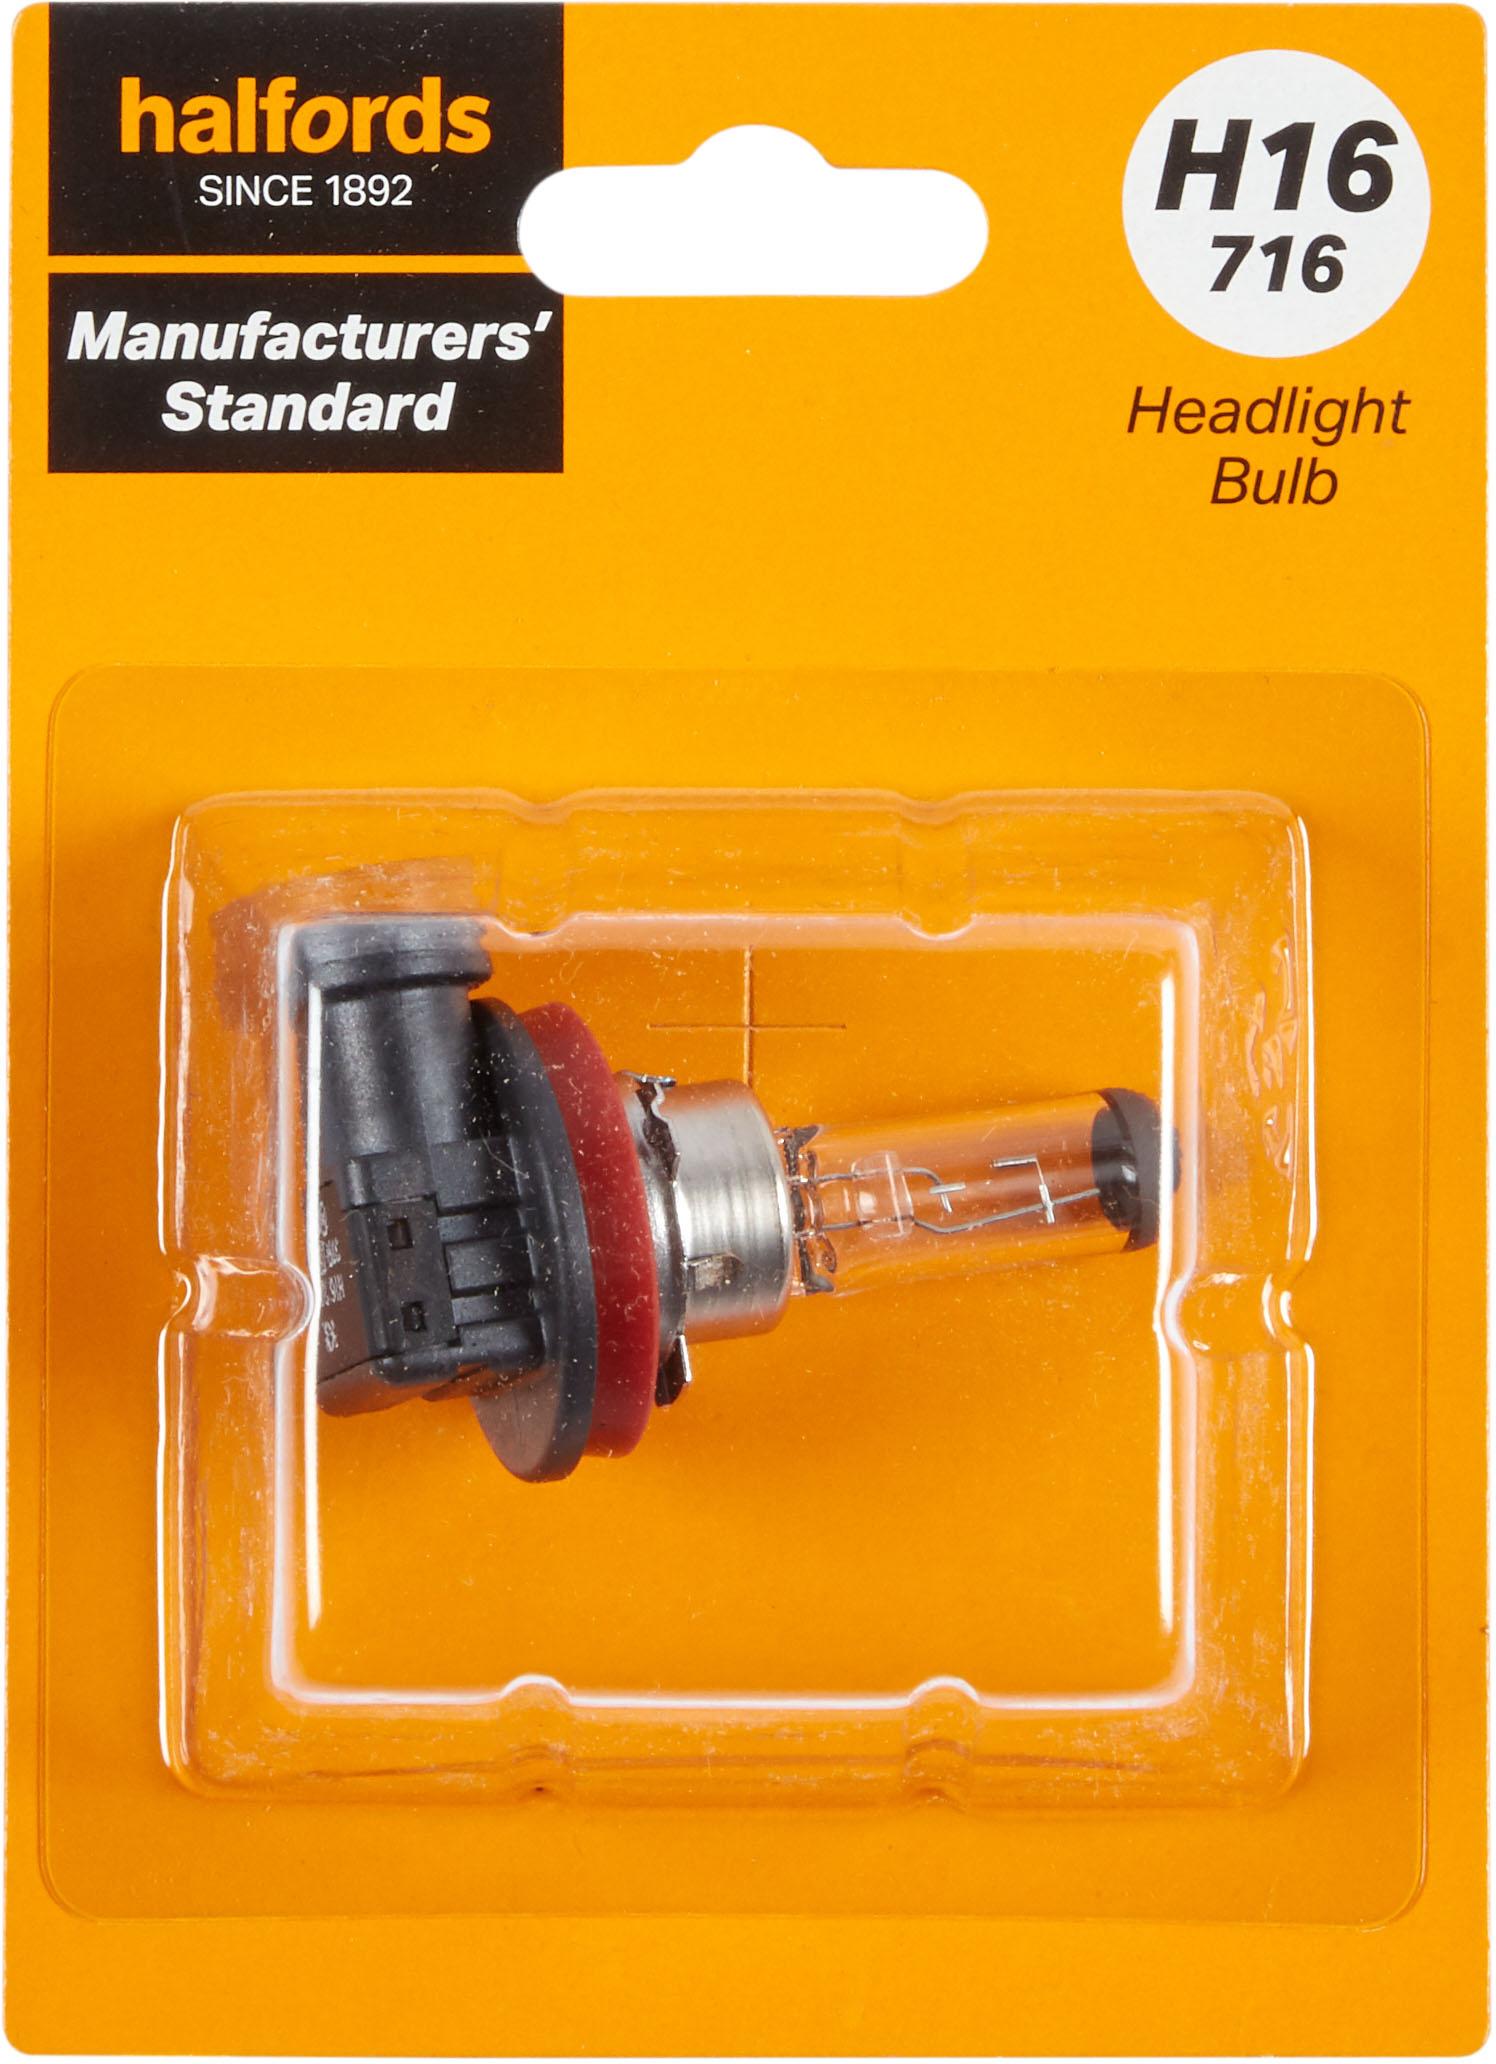 H16 716 Car Headlight Bulb Manufacturers Standard Halfords Single Pack